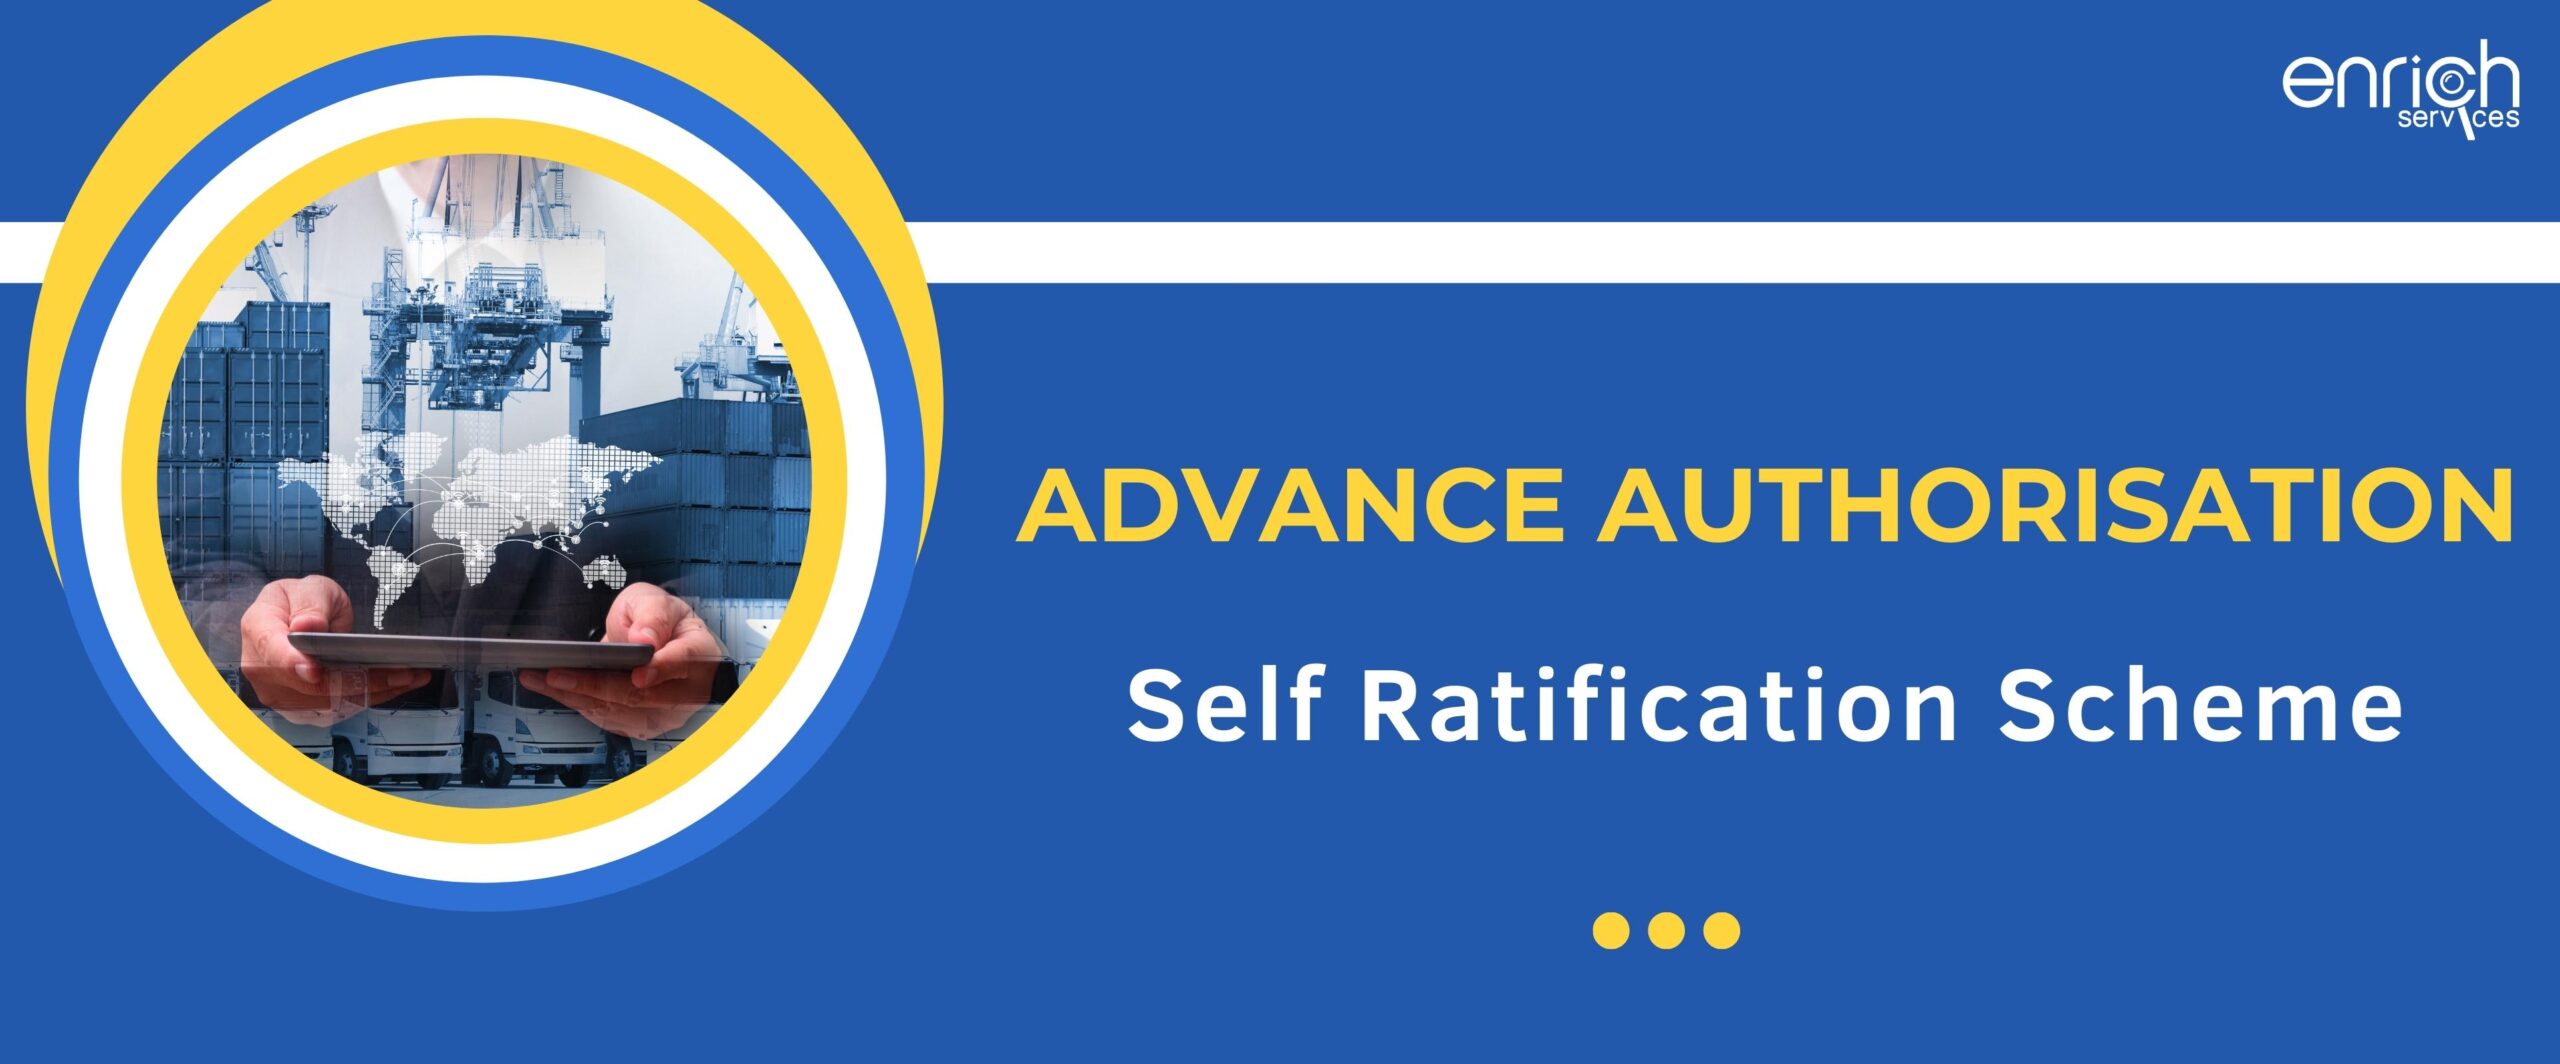 Advance Authorisation - Self Ratification Scheme